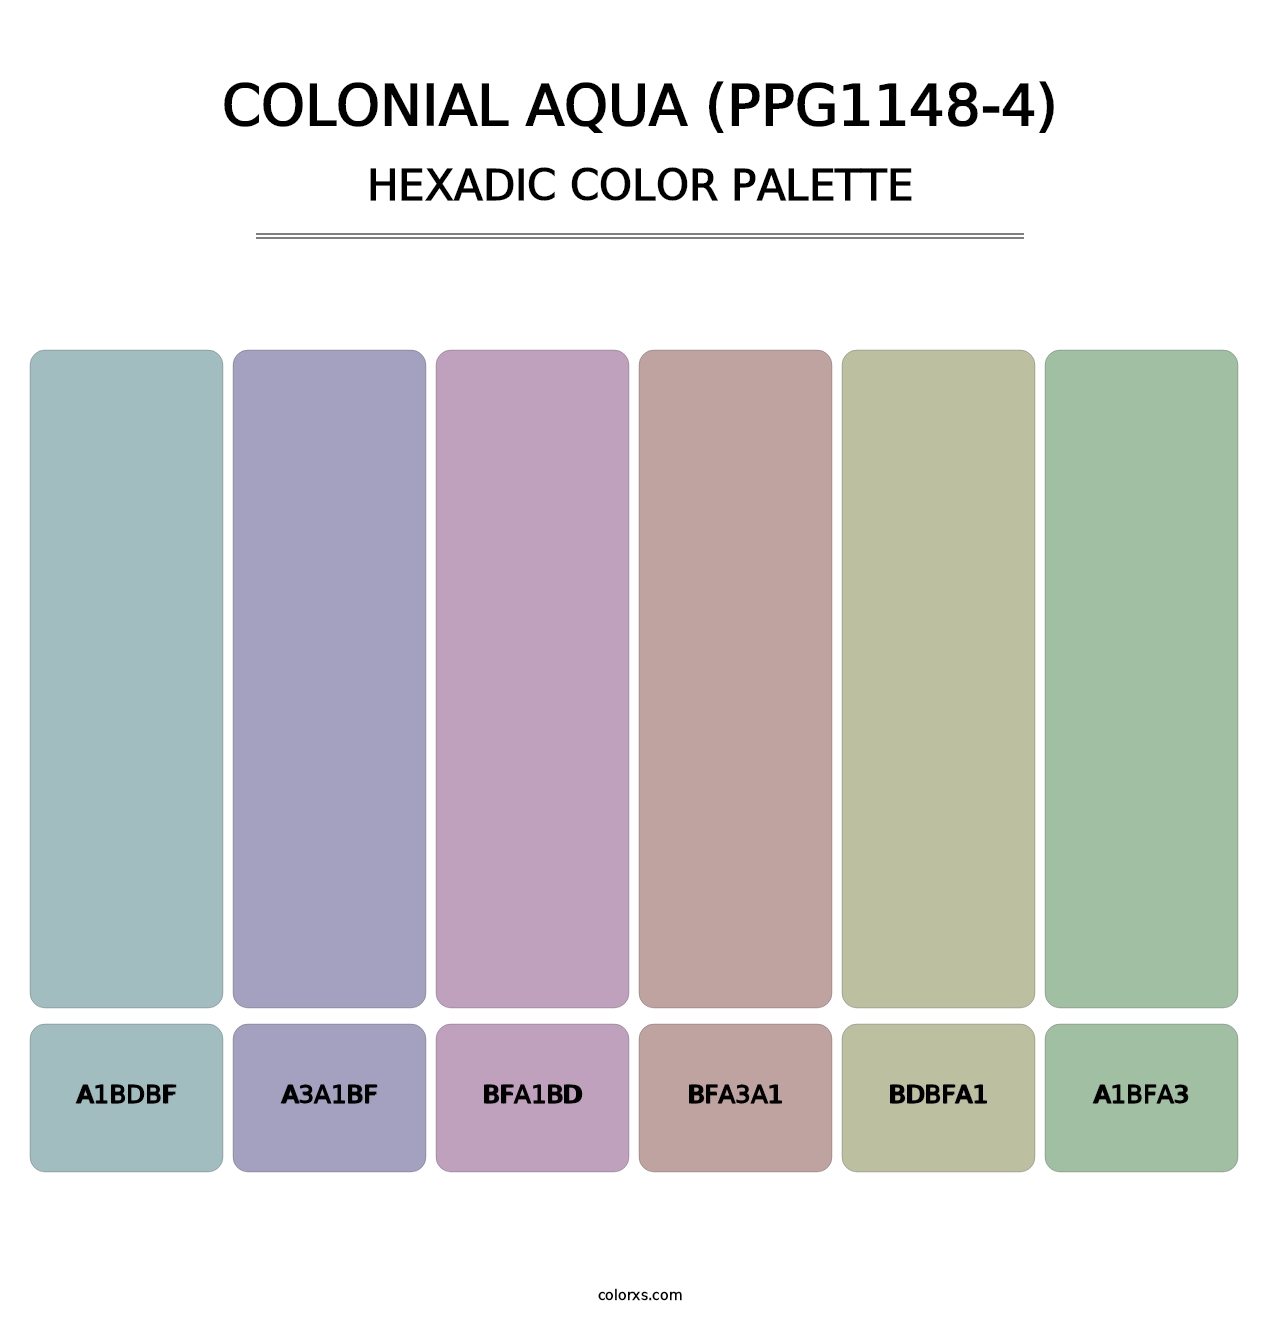 Colonial Aqua (PPG1148-4) - Hexadic Color Palette